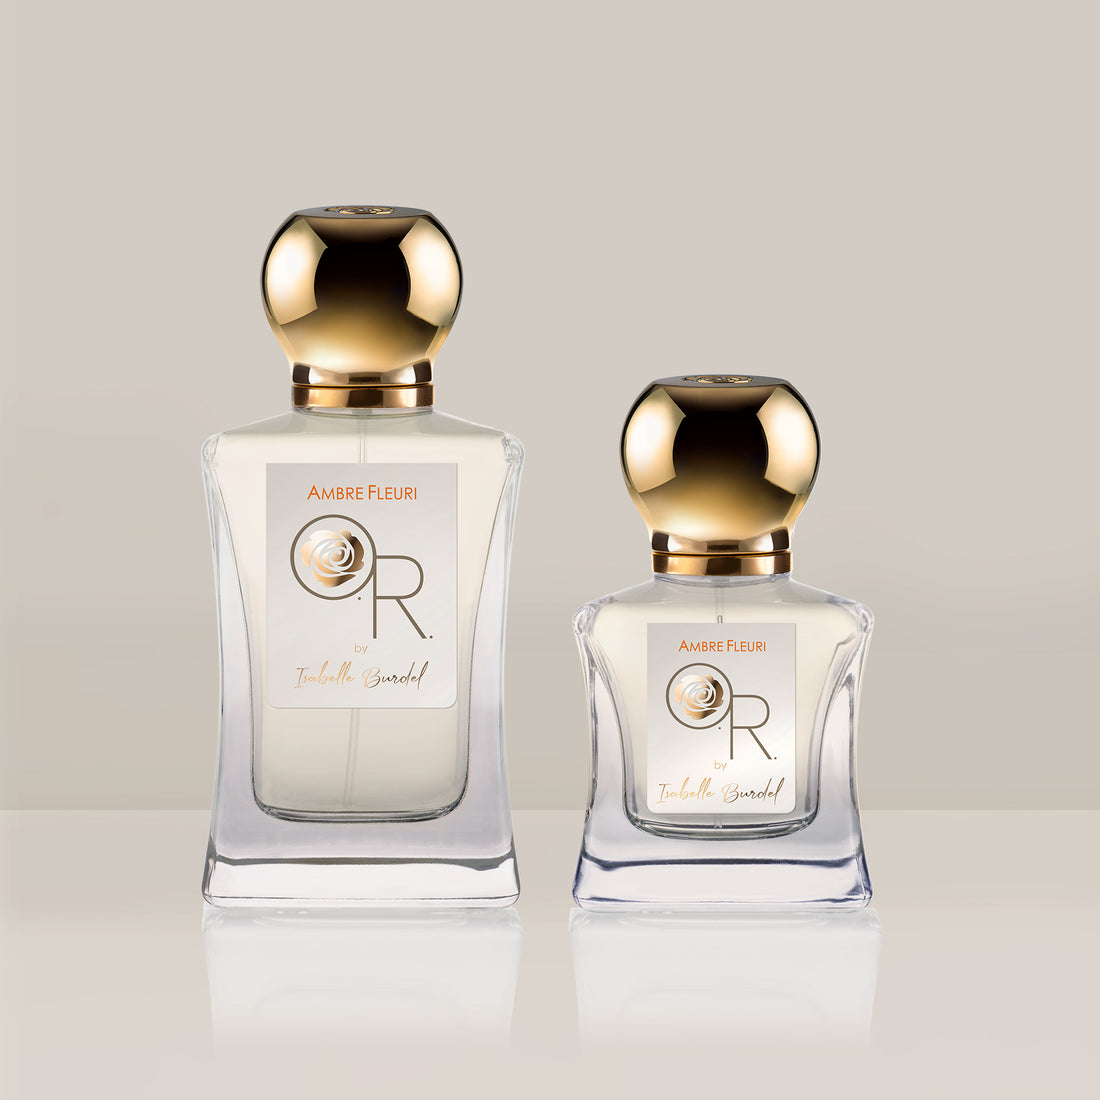 Les deux formats du parfum &quot;Ambre Fleuri&quot;